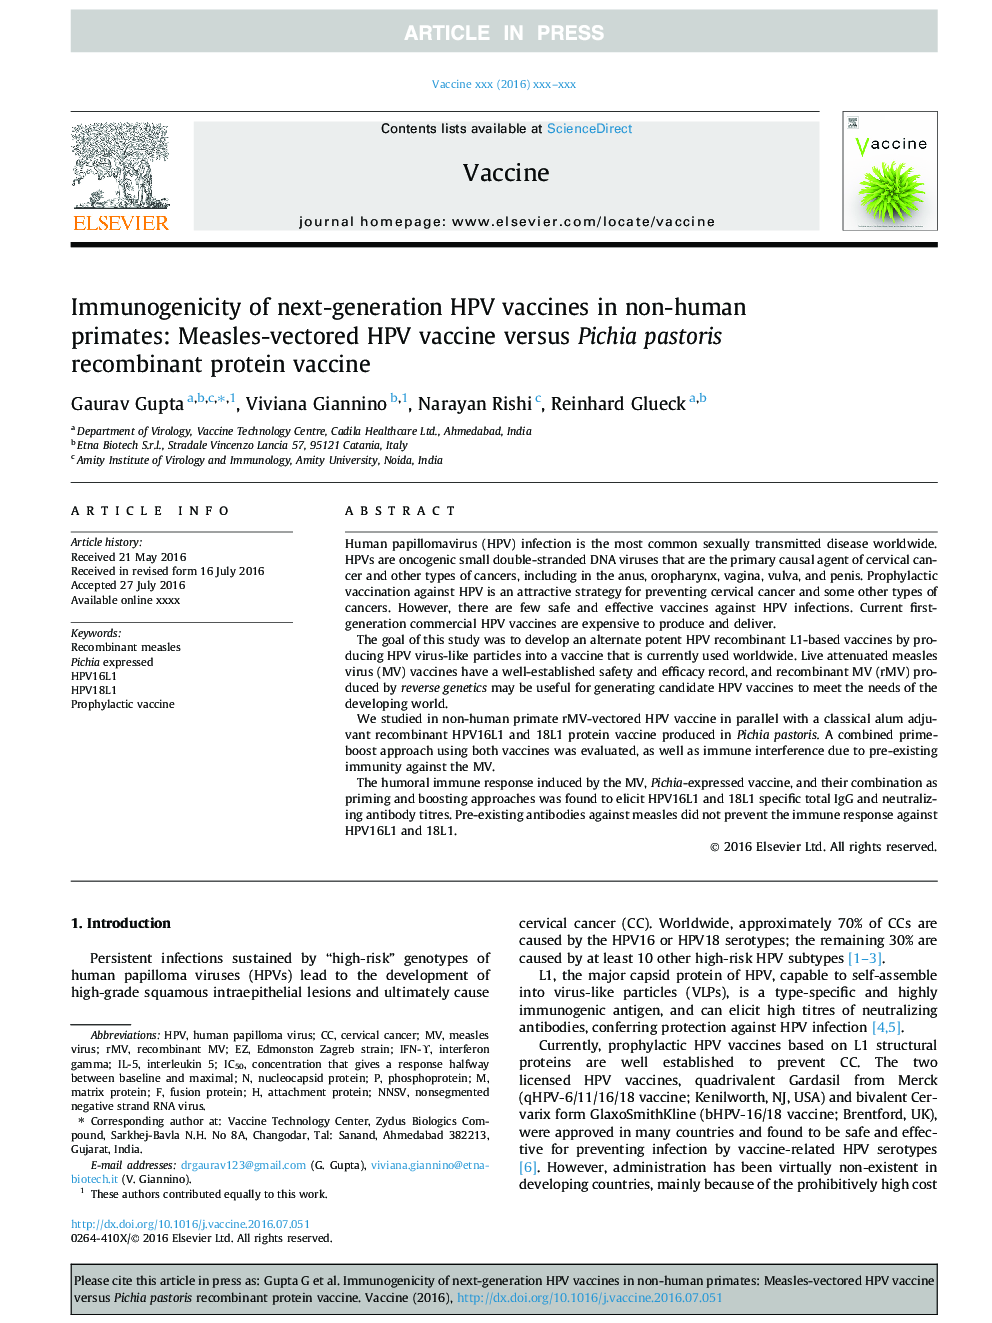 Immunogenicity of next-generation HPV vaccines in non-human primates: Measles-vectored HPV vaccine versus Pichia pastoris recombinant protein vaccine